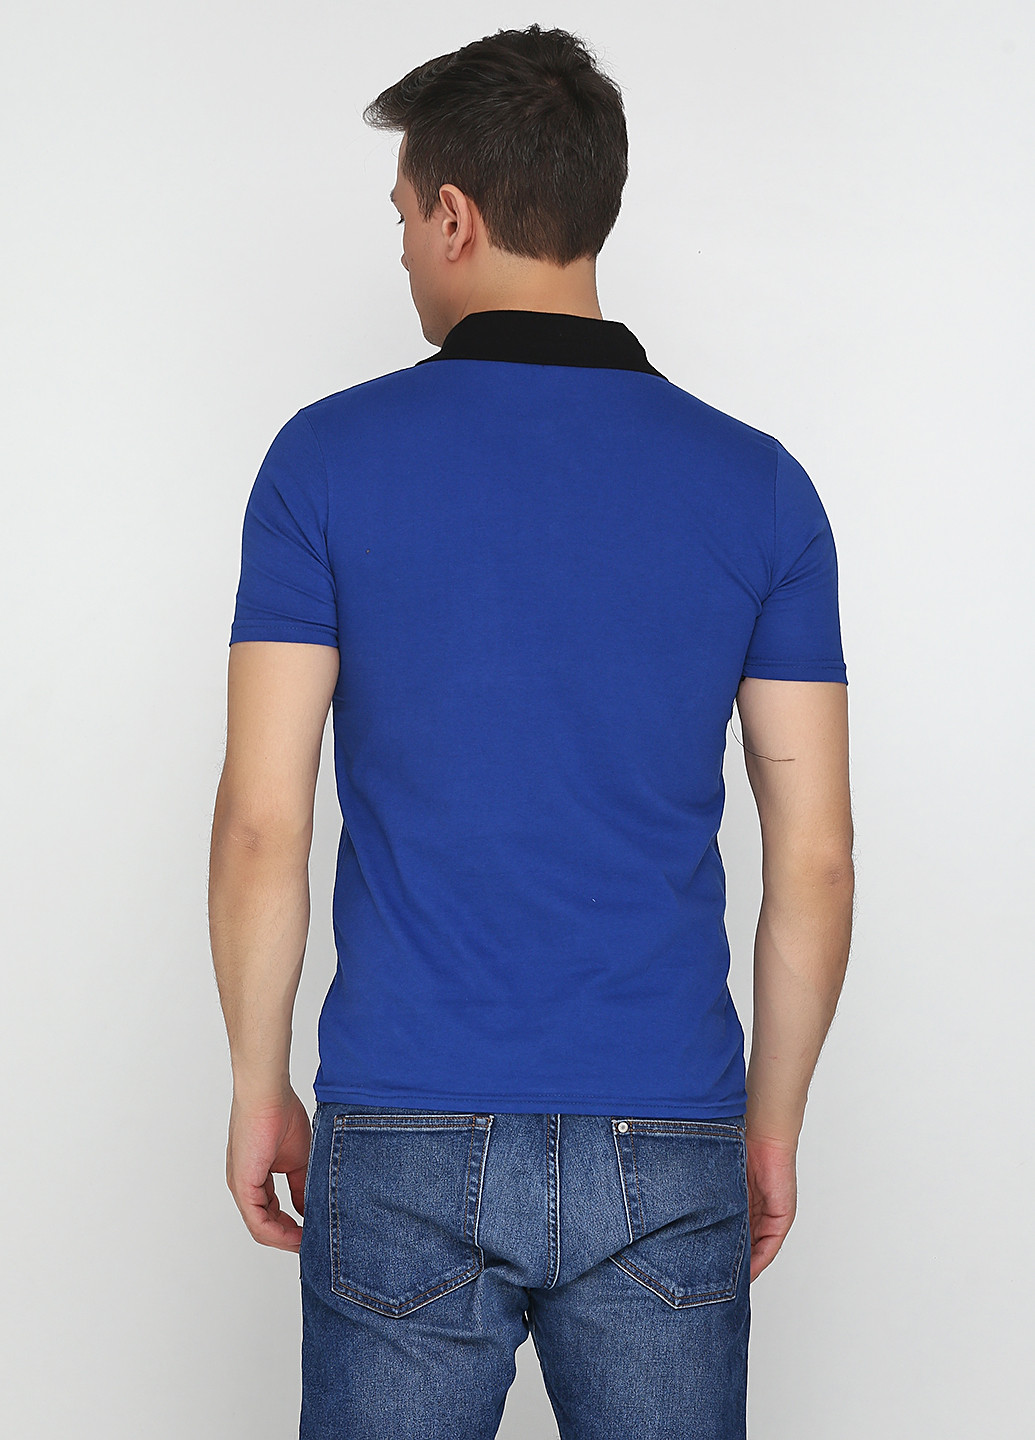 Синяя футболка-поло для мужчин Osce с логотипом